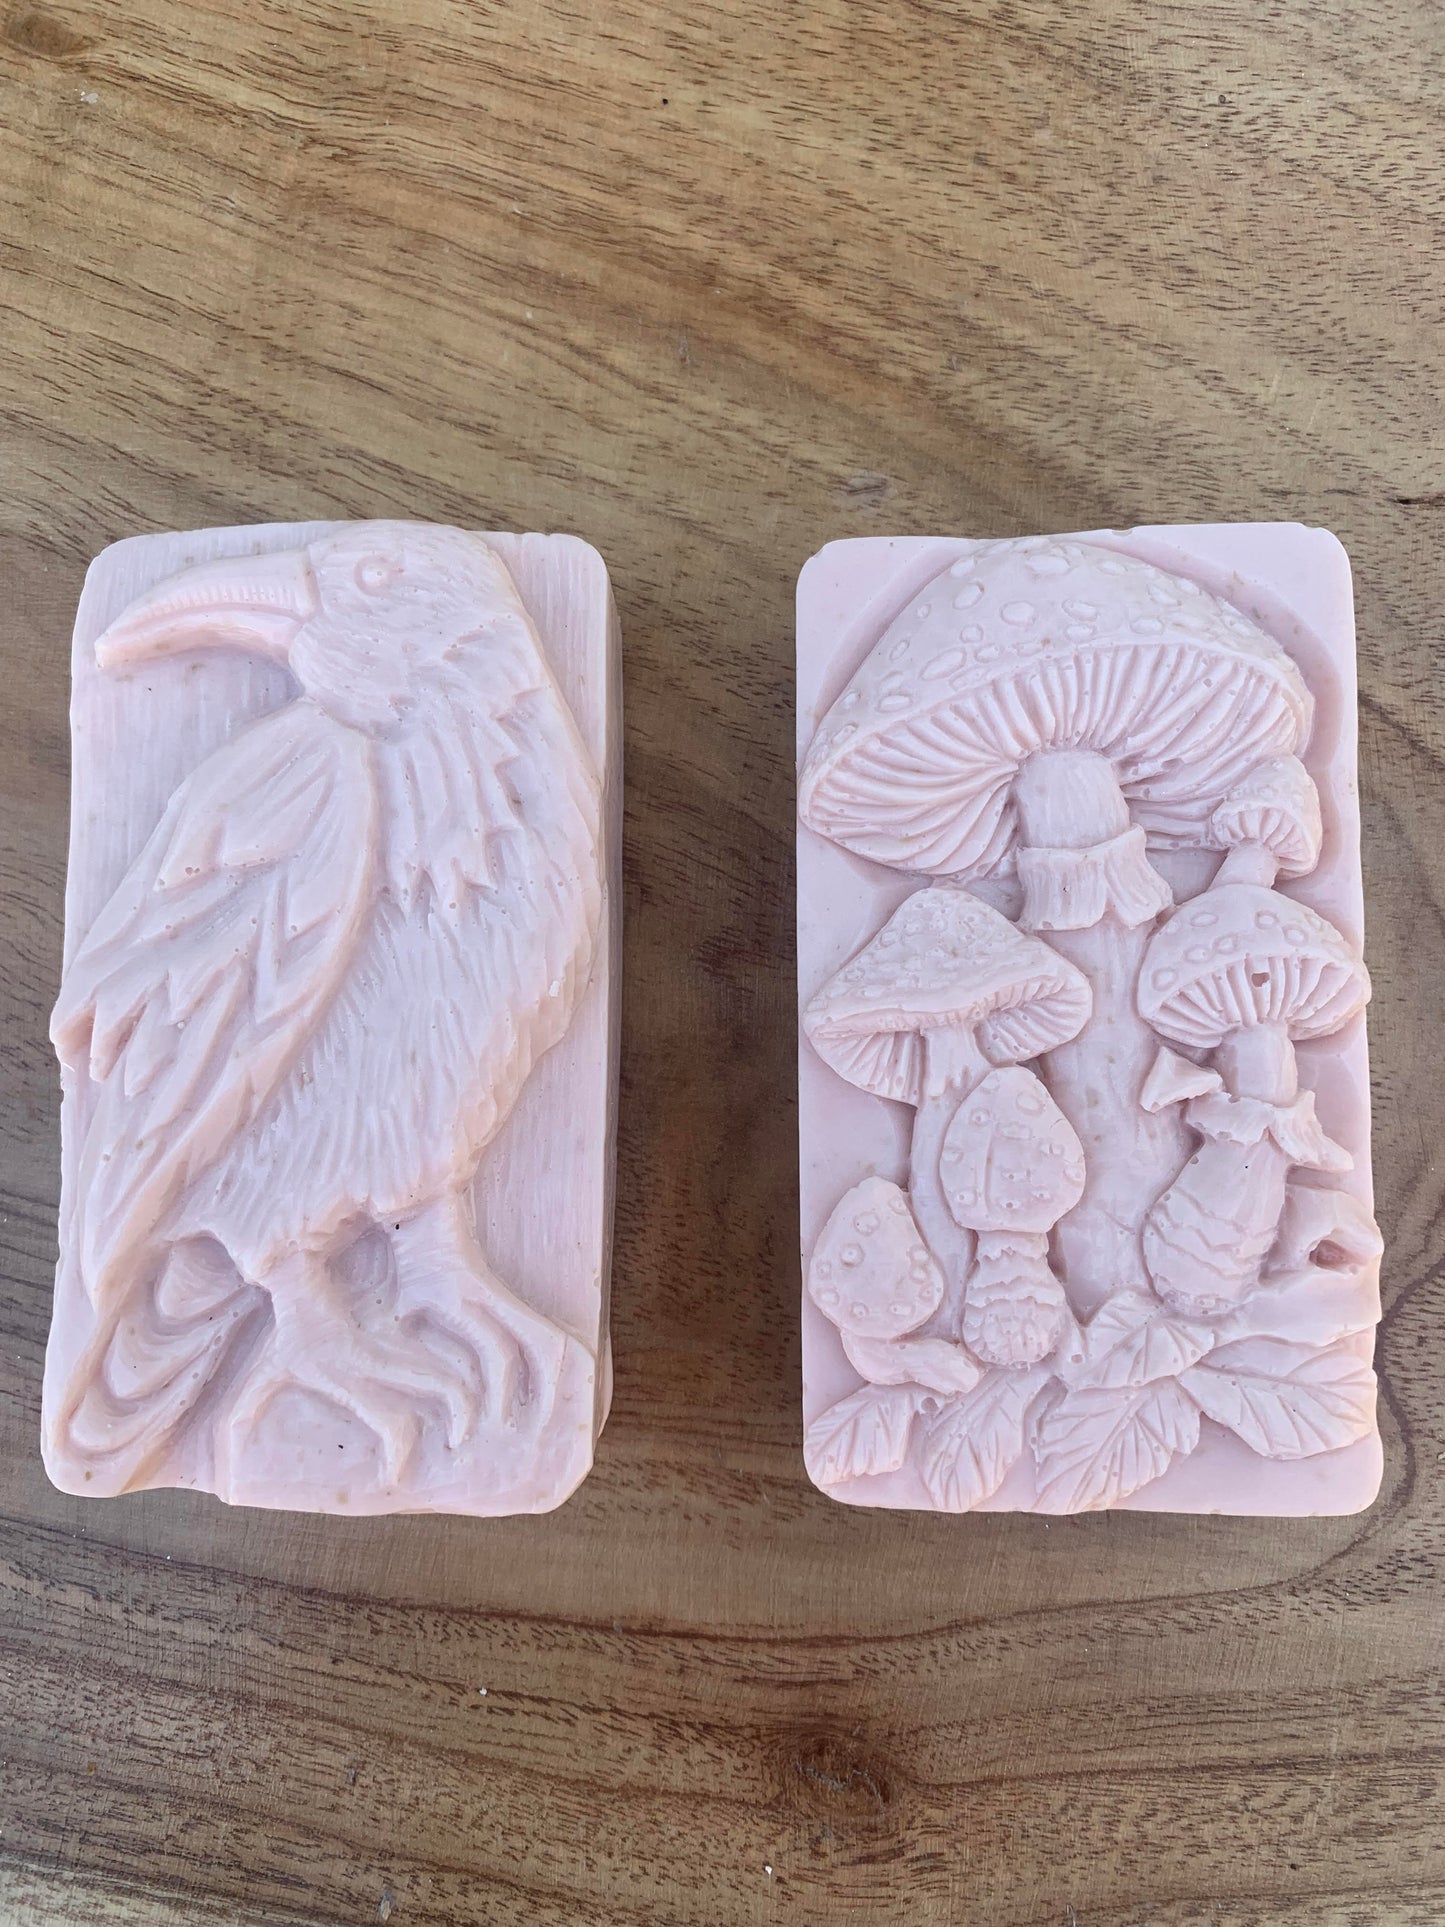 Artisian Mushroom Soap